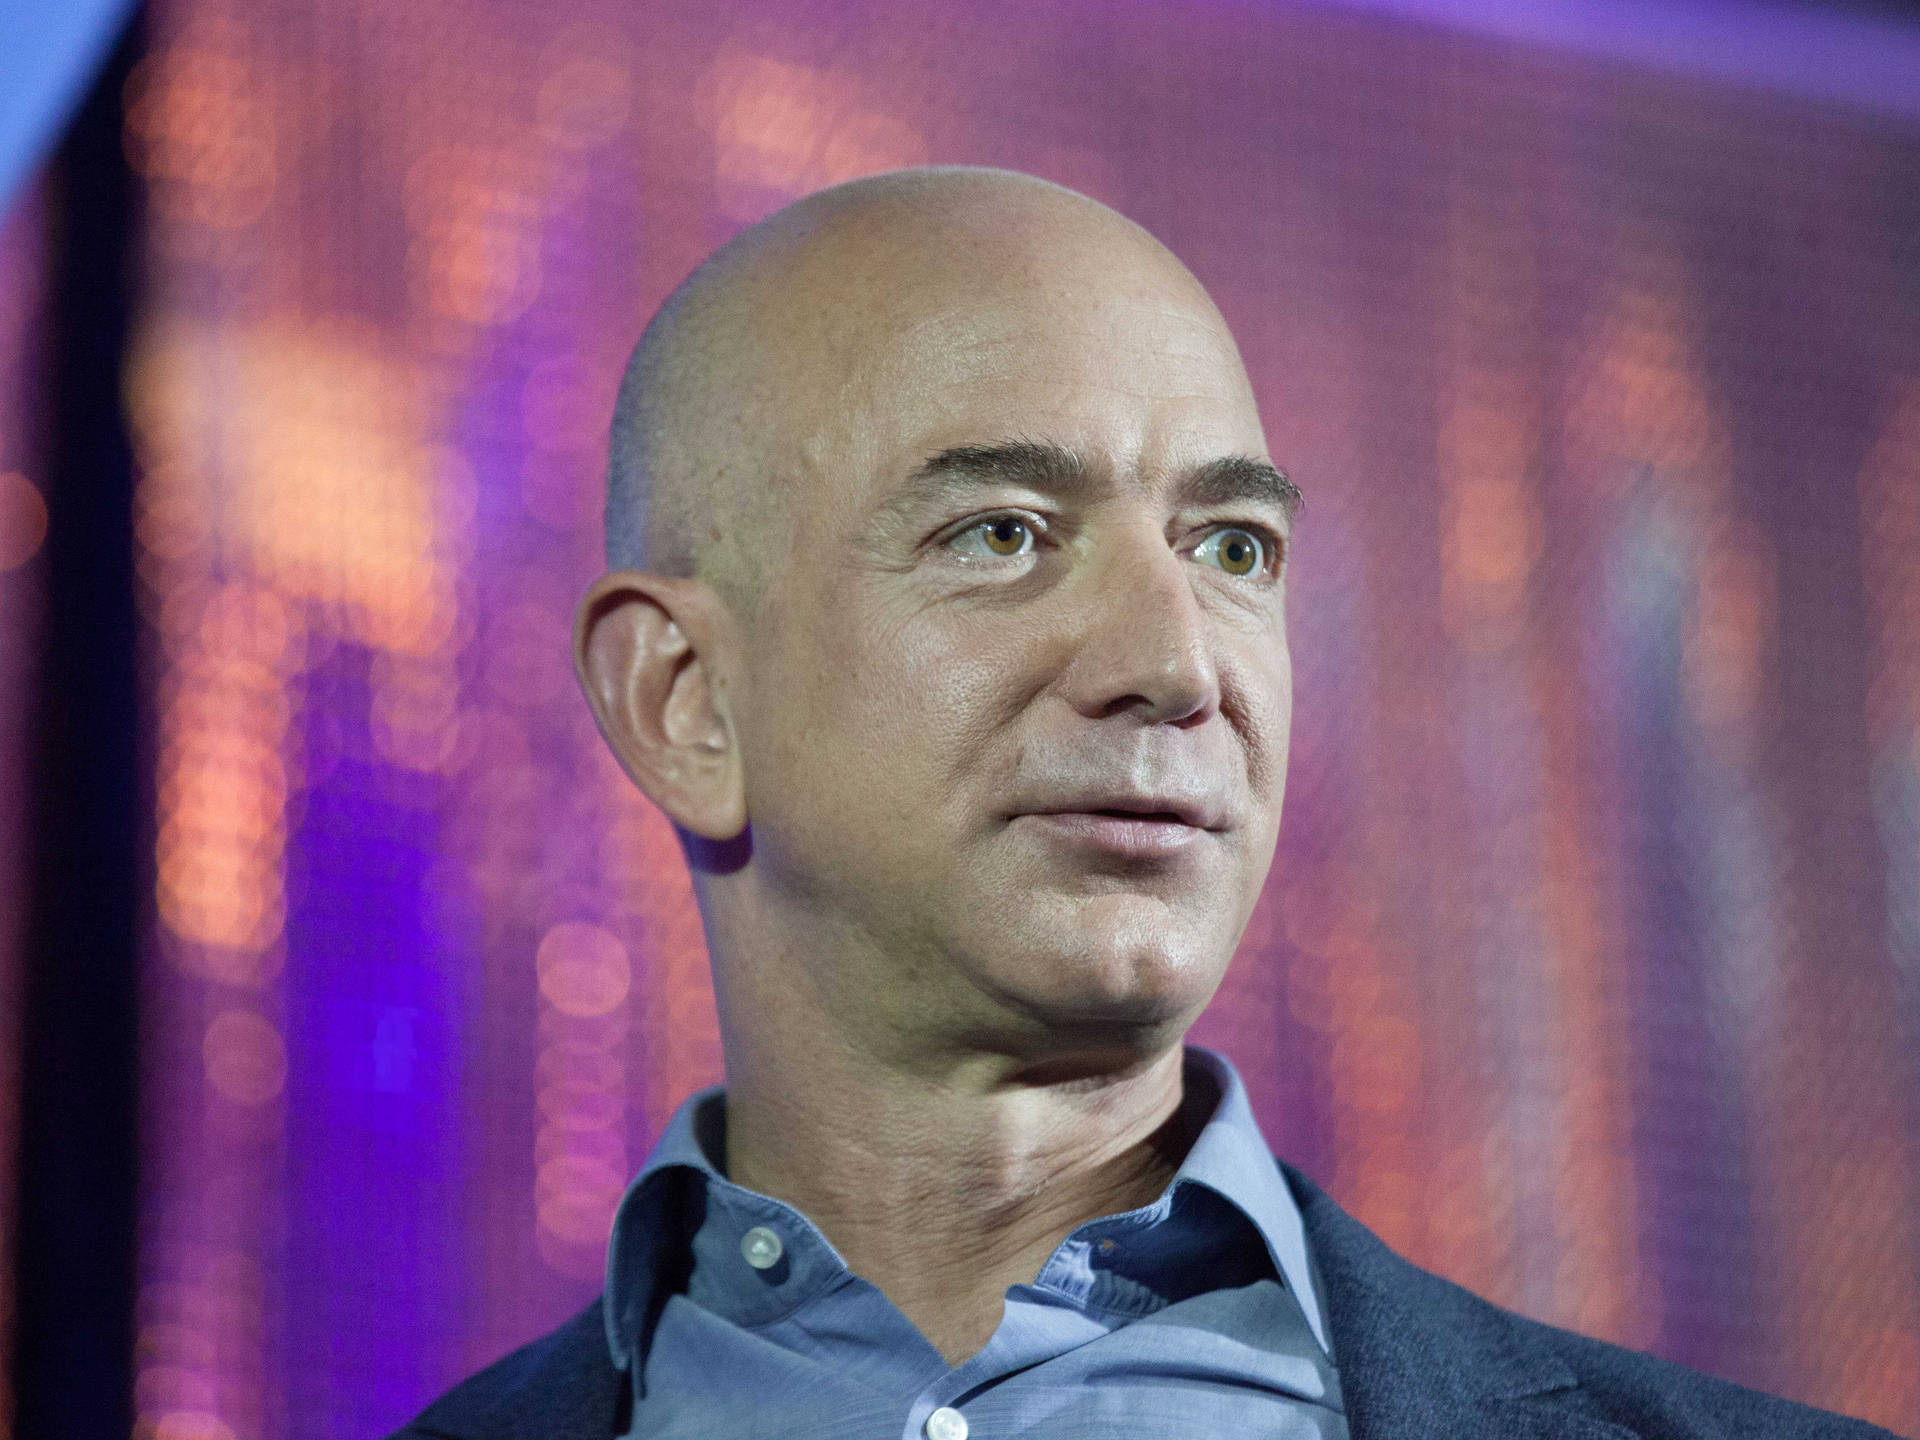 Jeff Bezos Against Sparkly Background Wallpaper